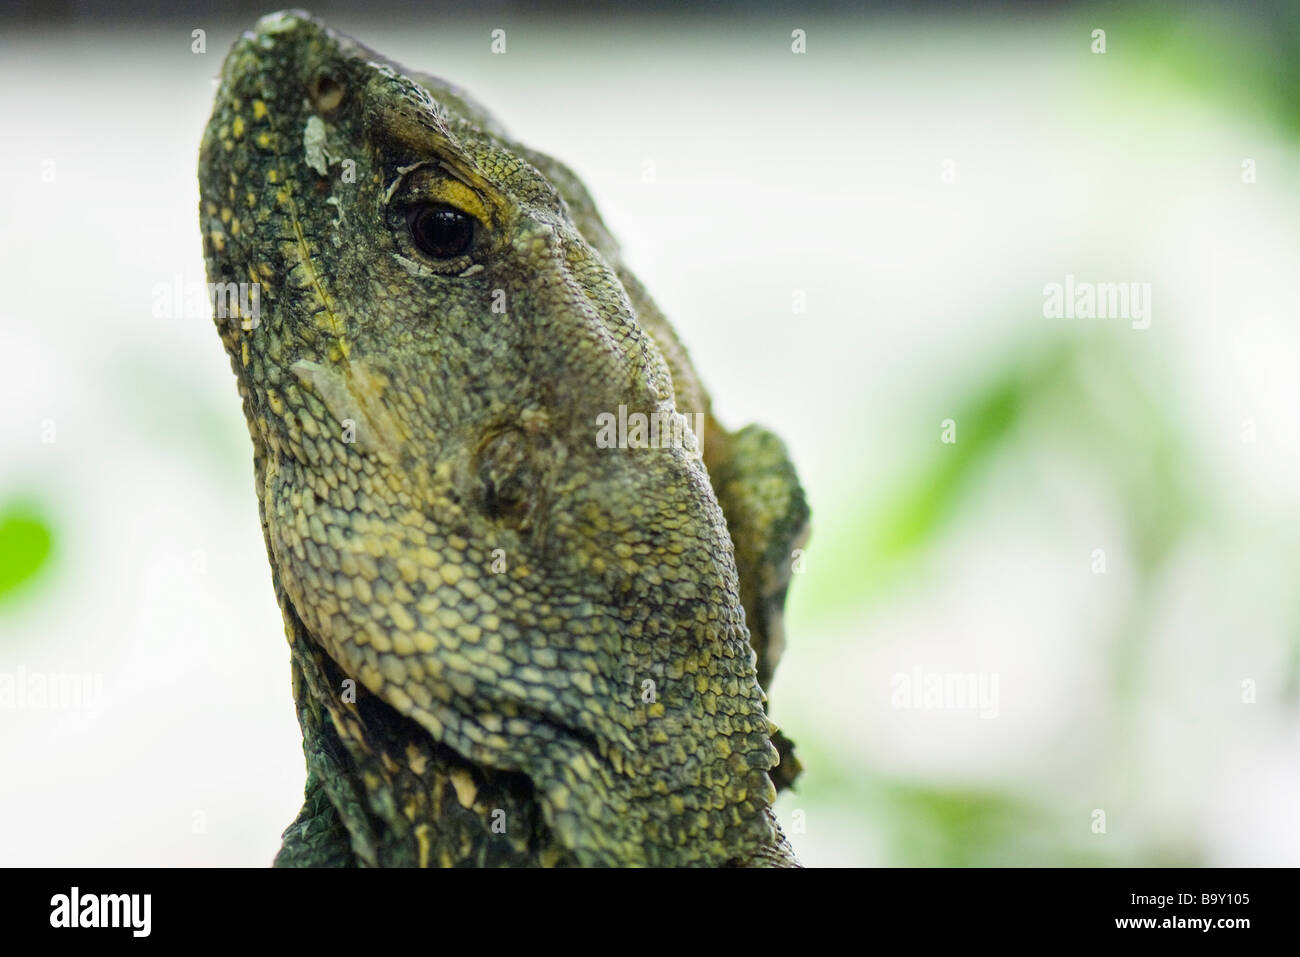 Frill-necked lizard (Chlamydosaurus kingii) close-up Stock Photo